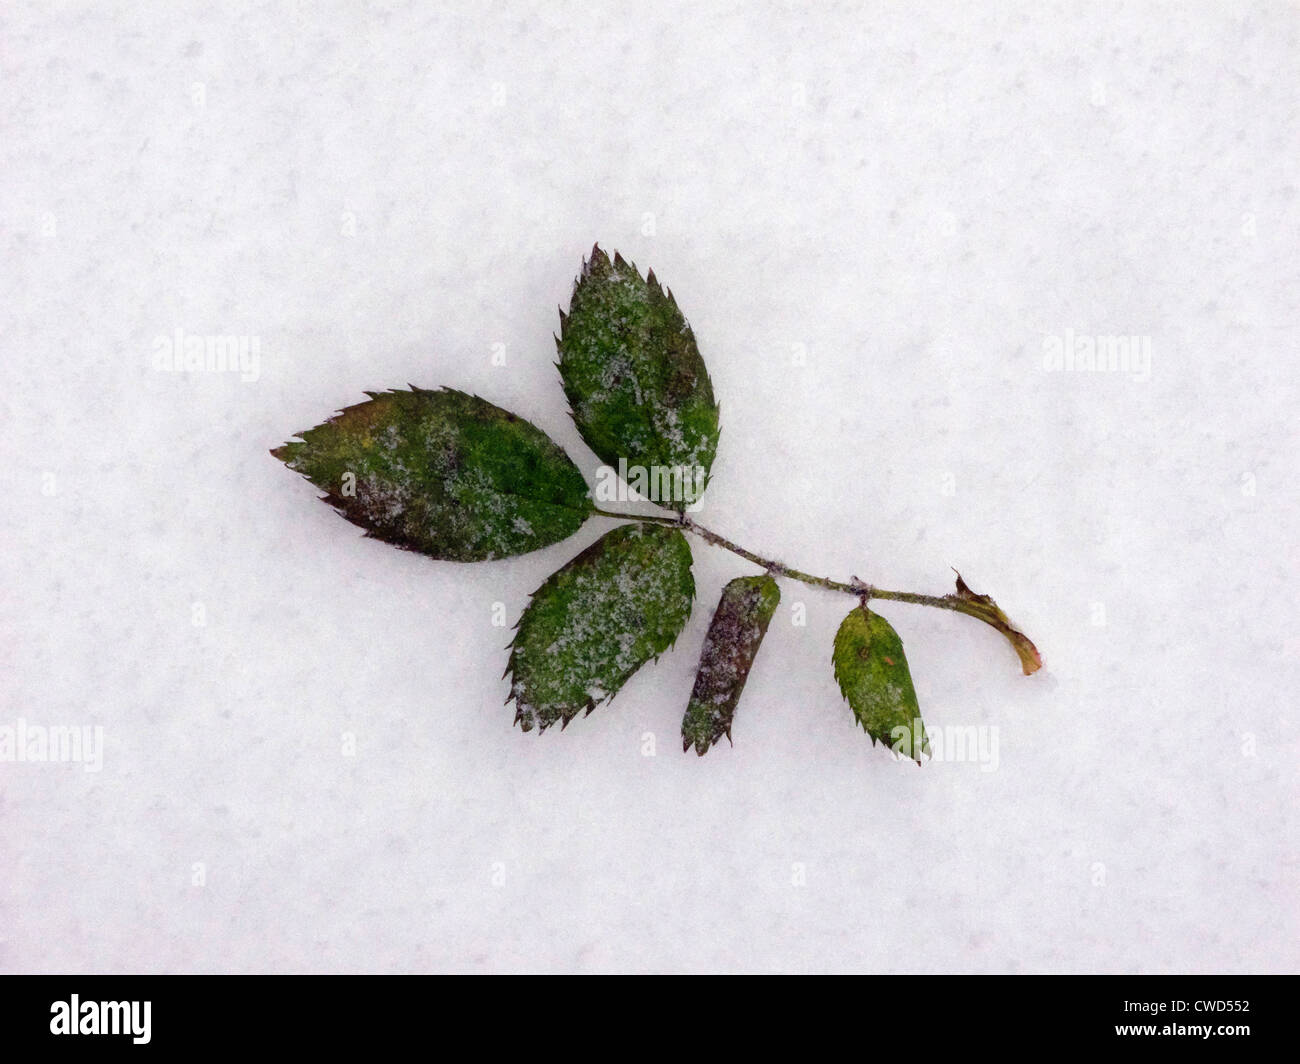 Icy leaf on snow Stock Photo